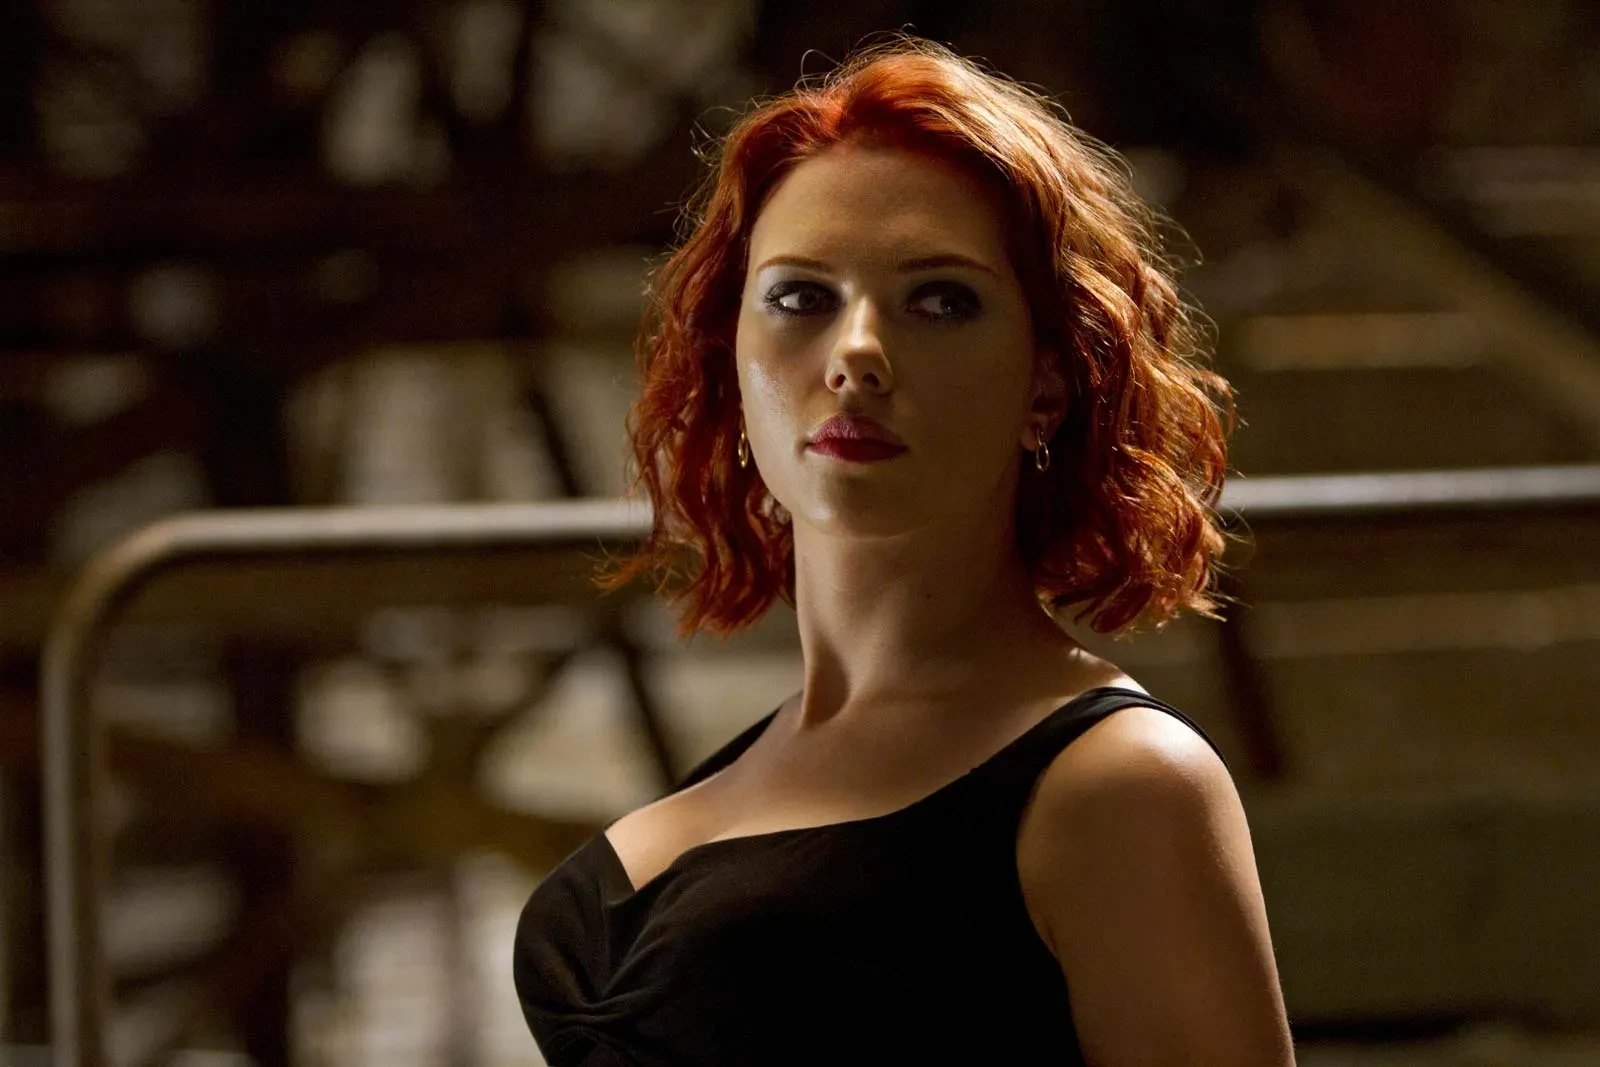 The Black Widow actress Scarlett Johansson had sued Disney in July 2022